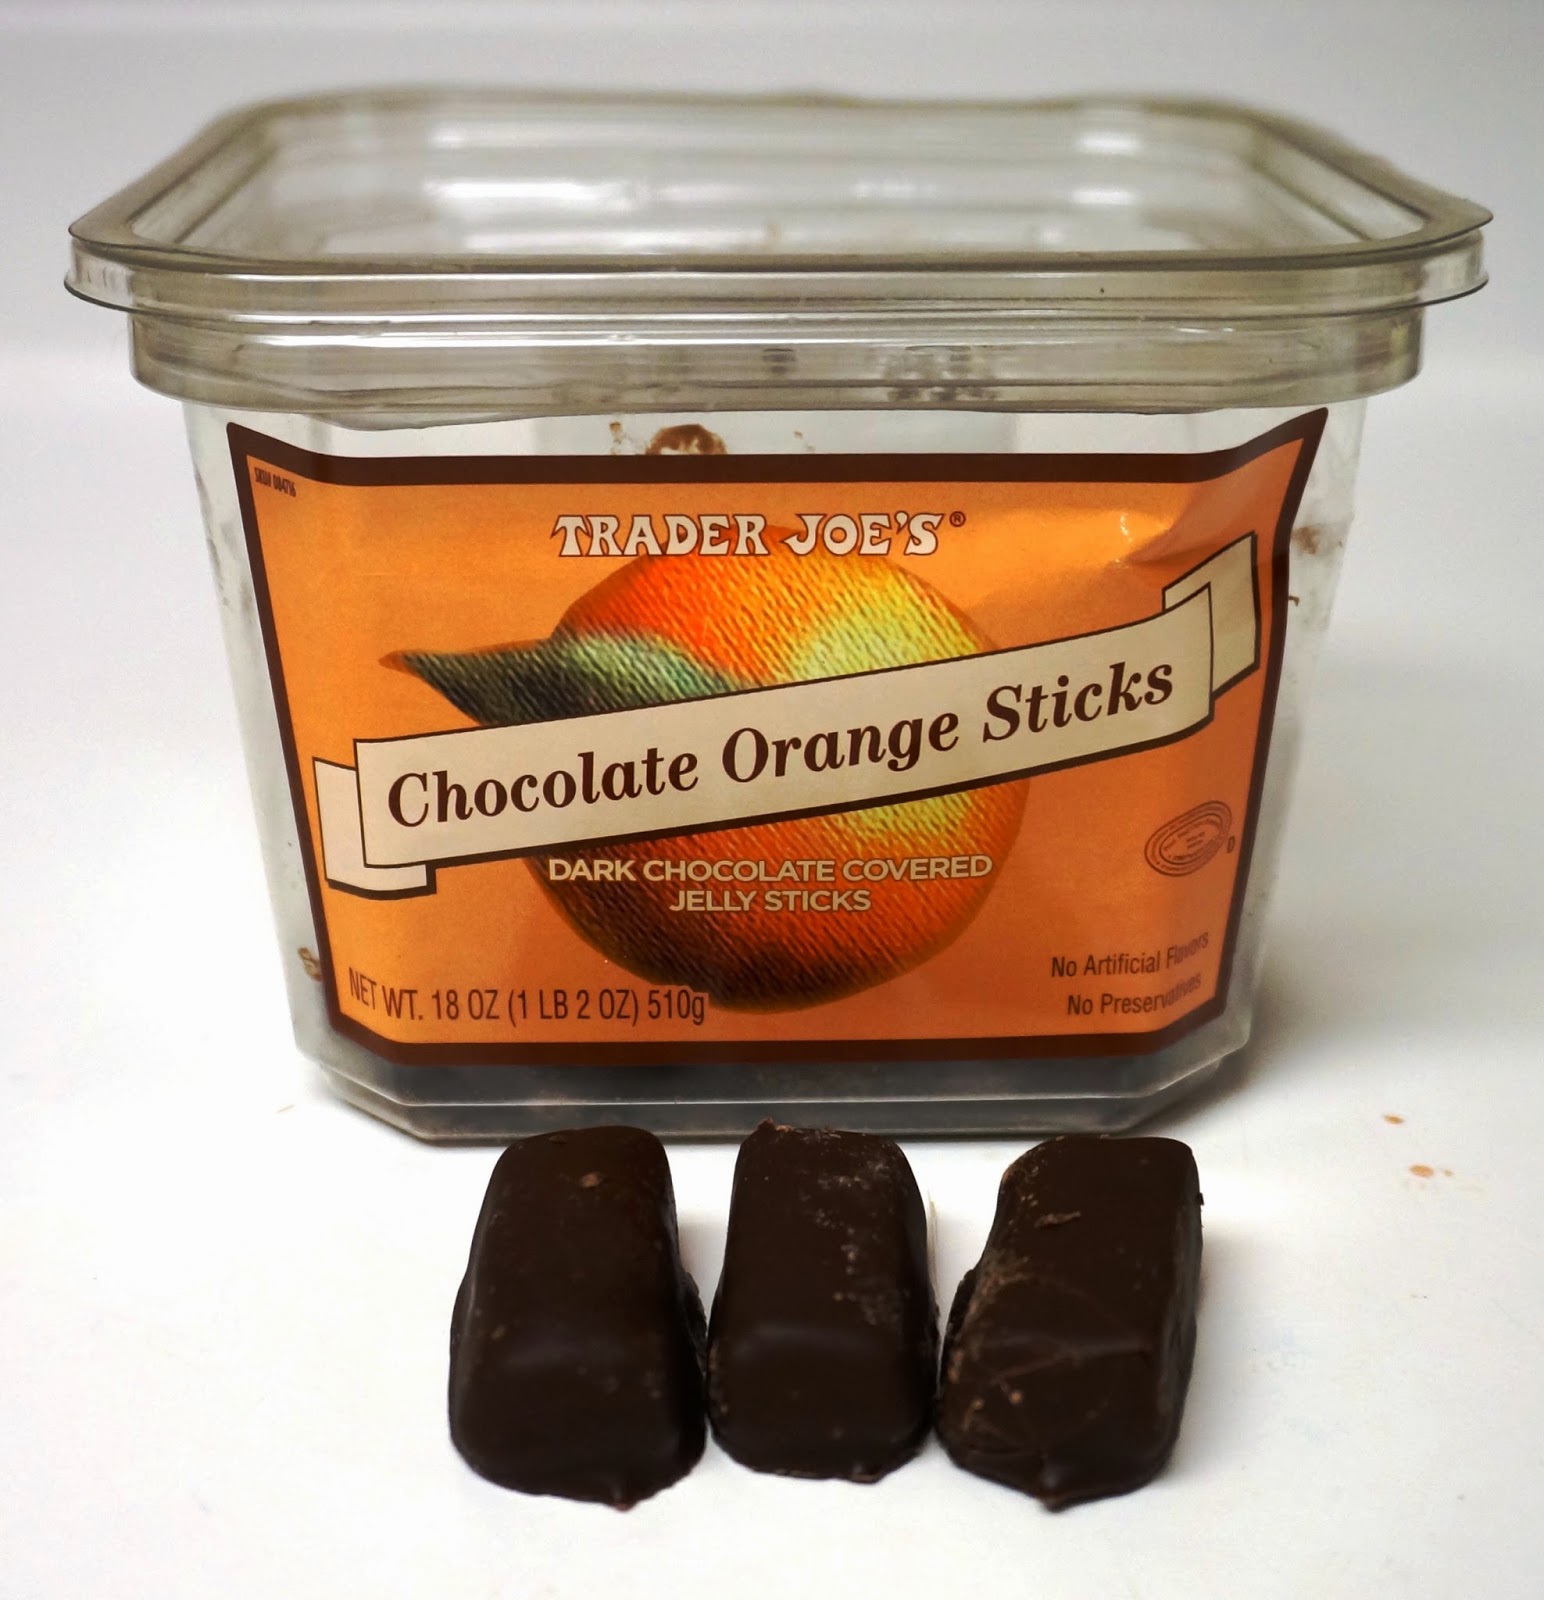 Exploring Trader Joe's: Trader Joe's Chocolate Orange Sticks